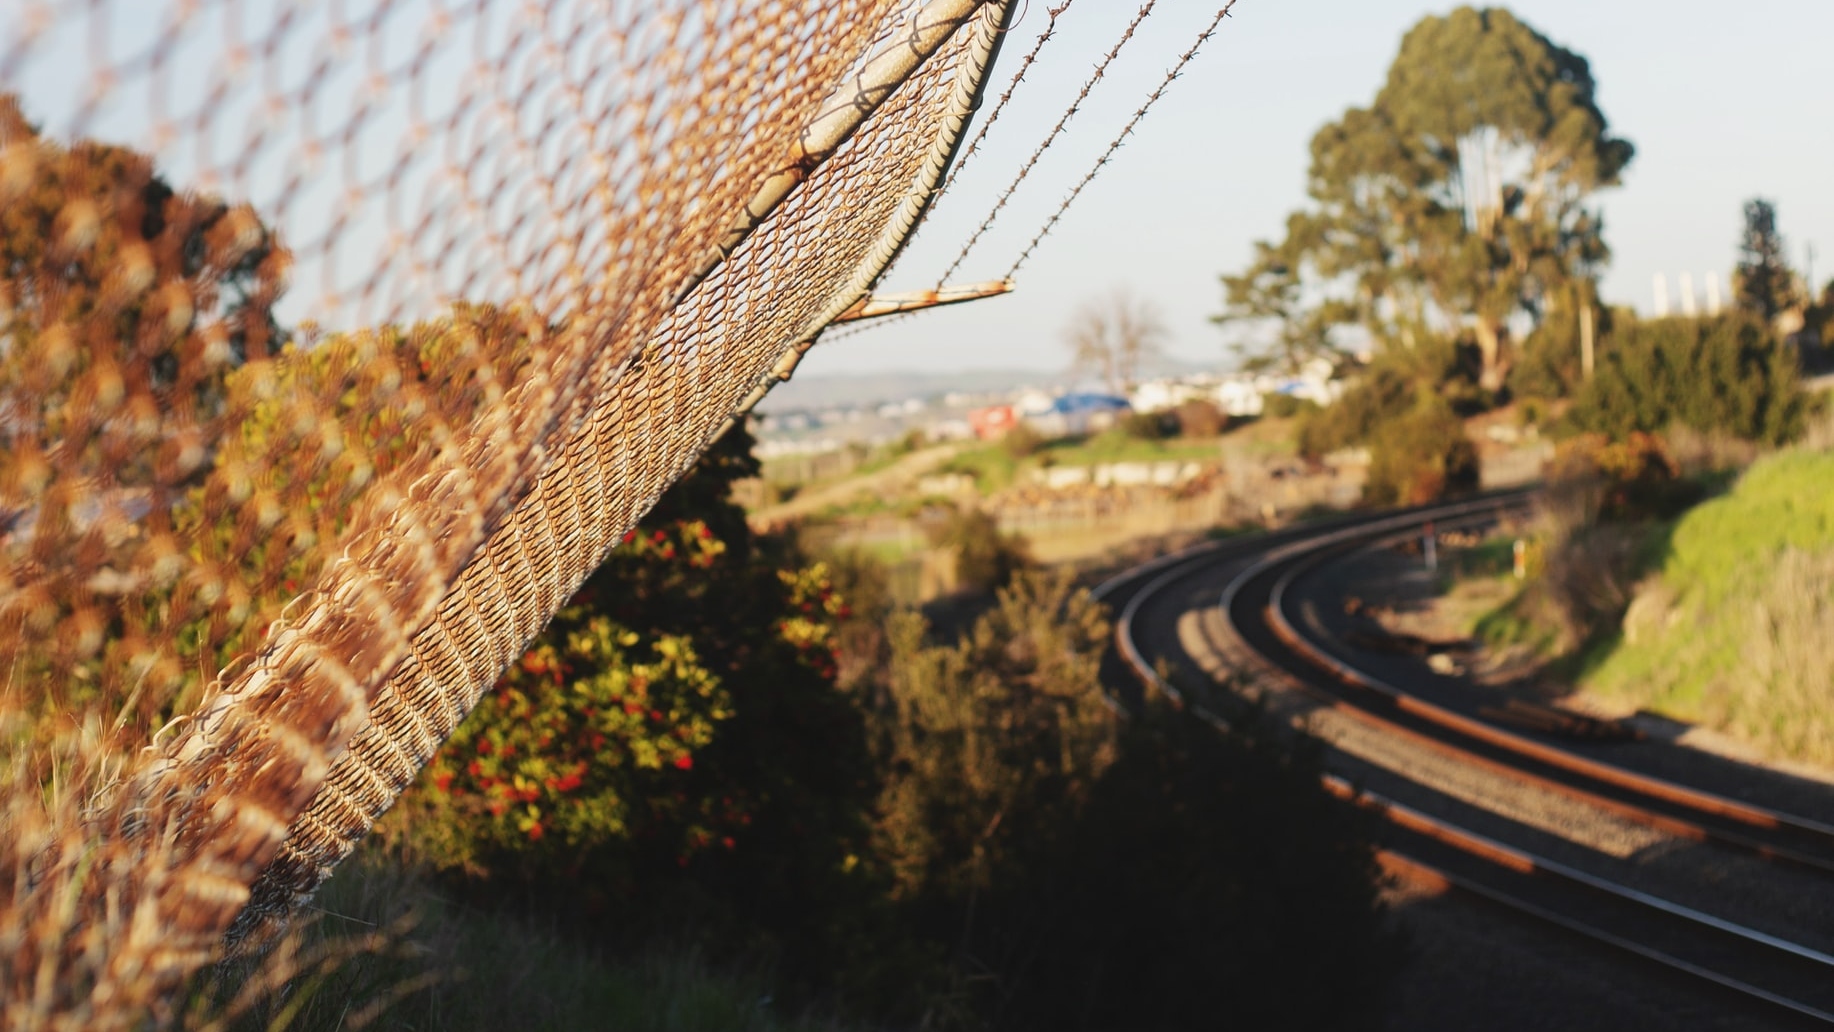 Rail lines near fences